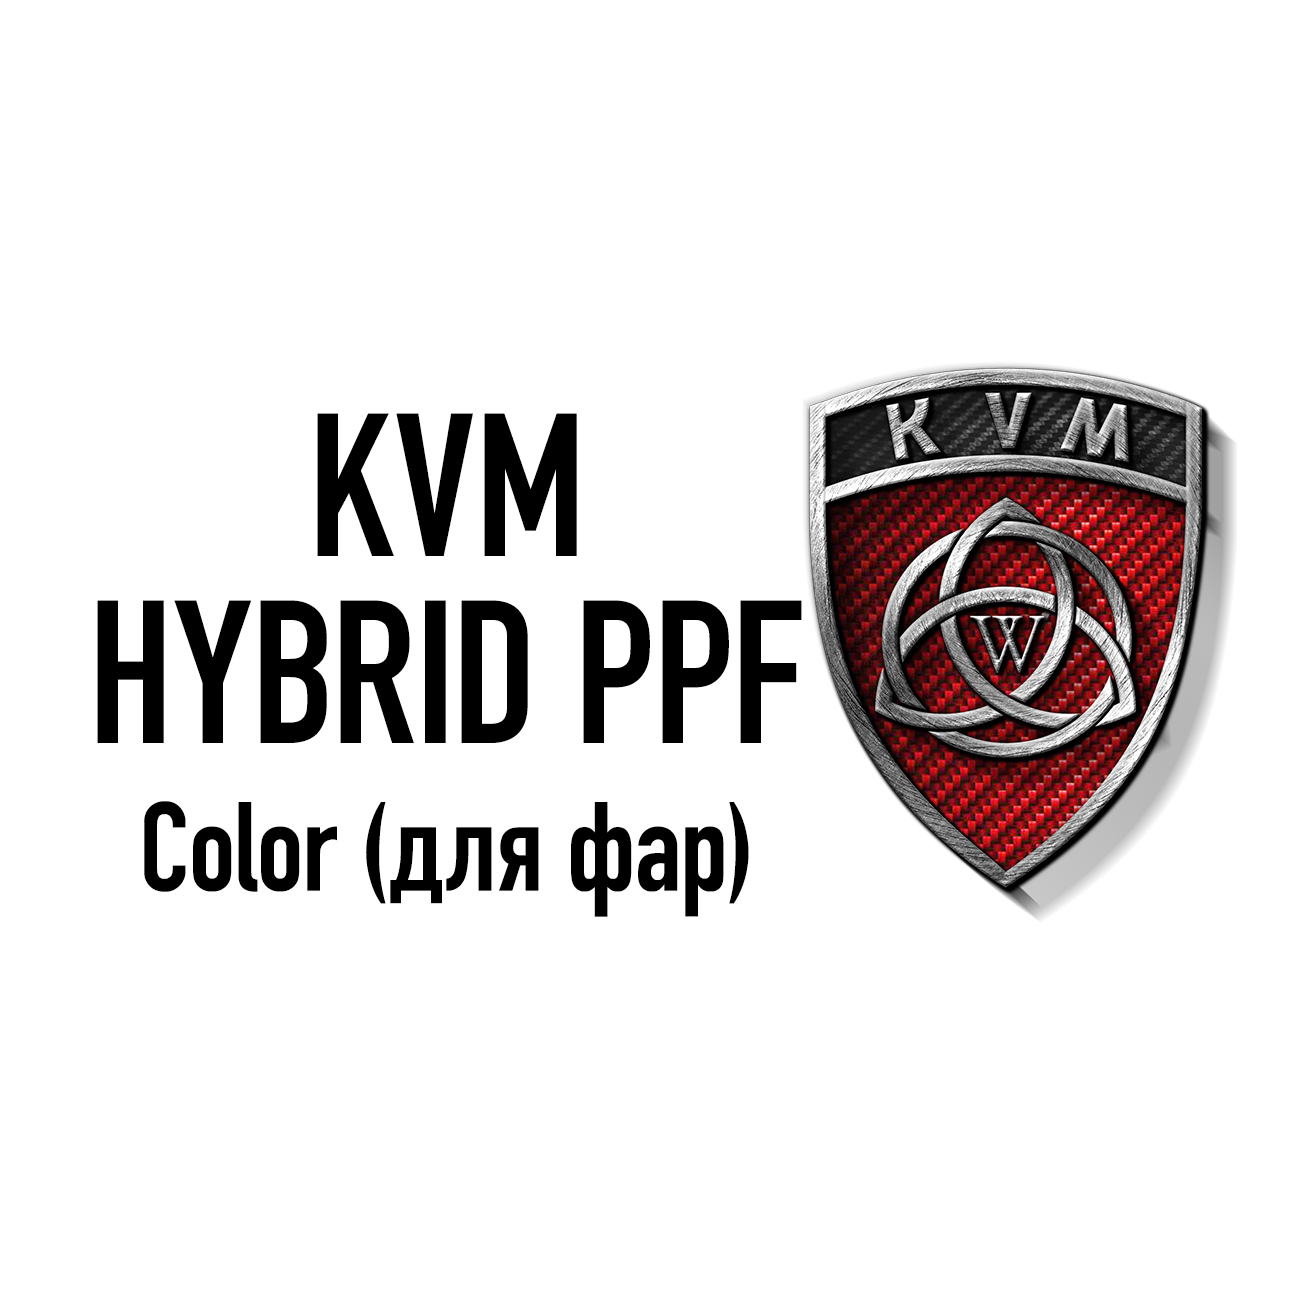 Пленка KVM HYBRID Black (Черный) 0,61 для фар